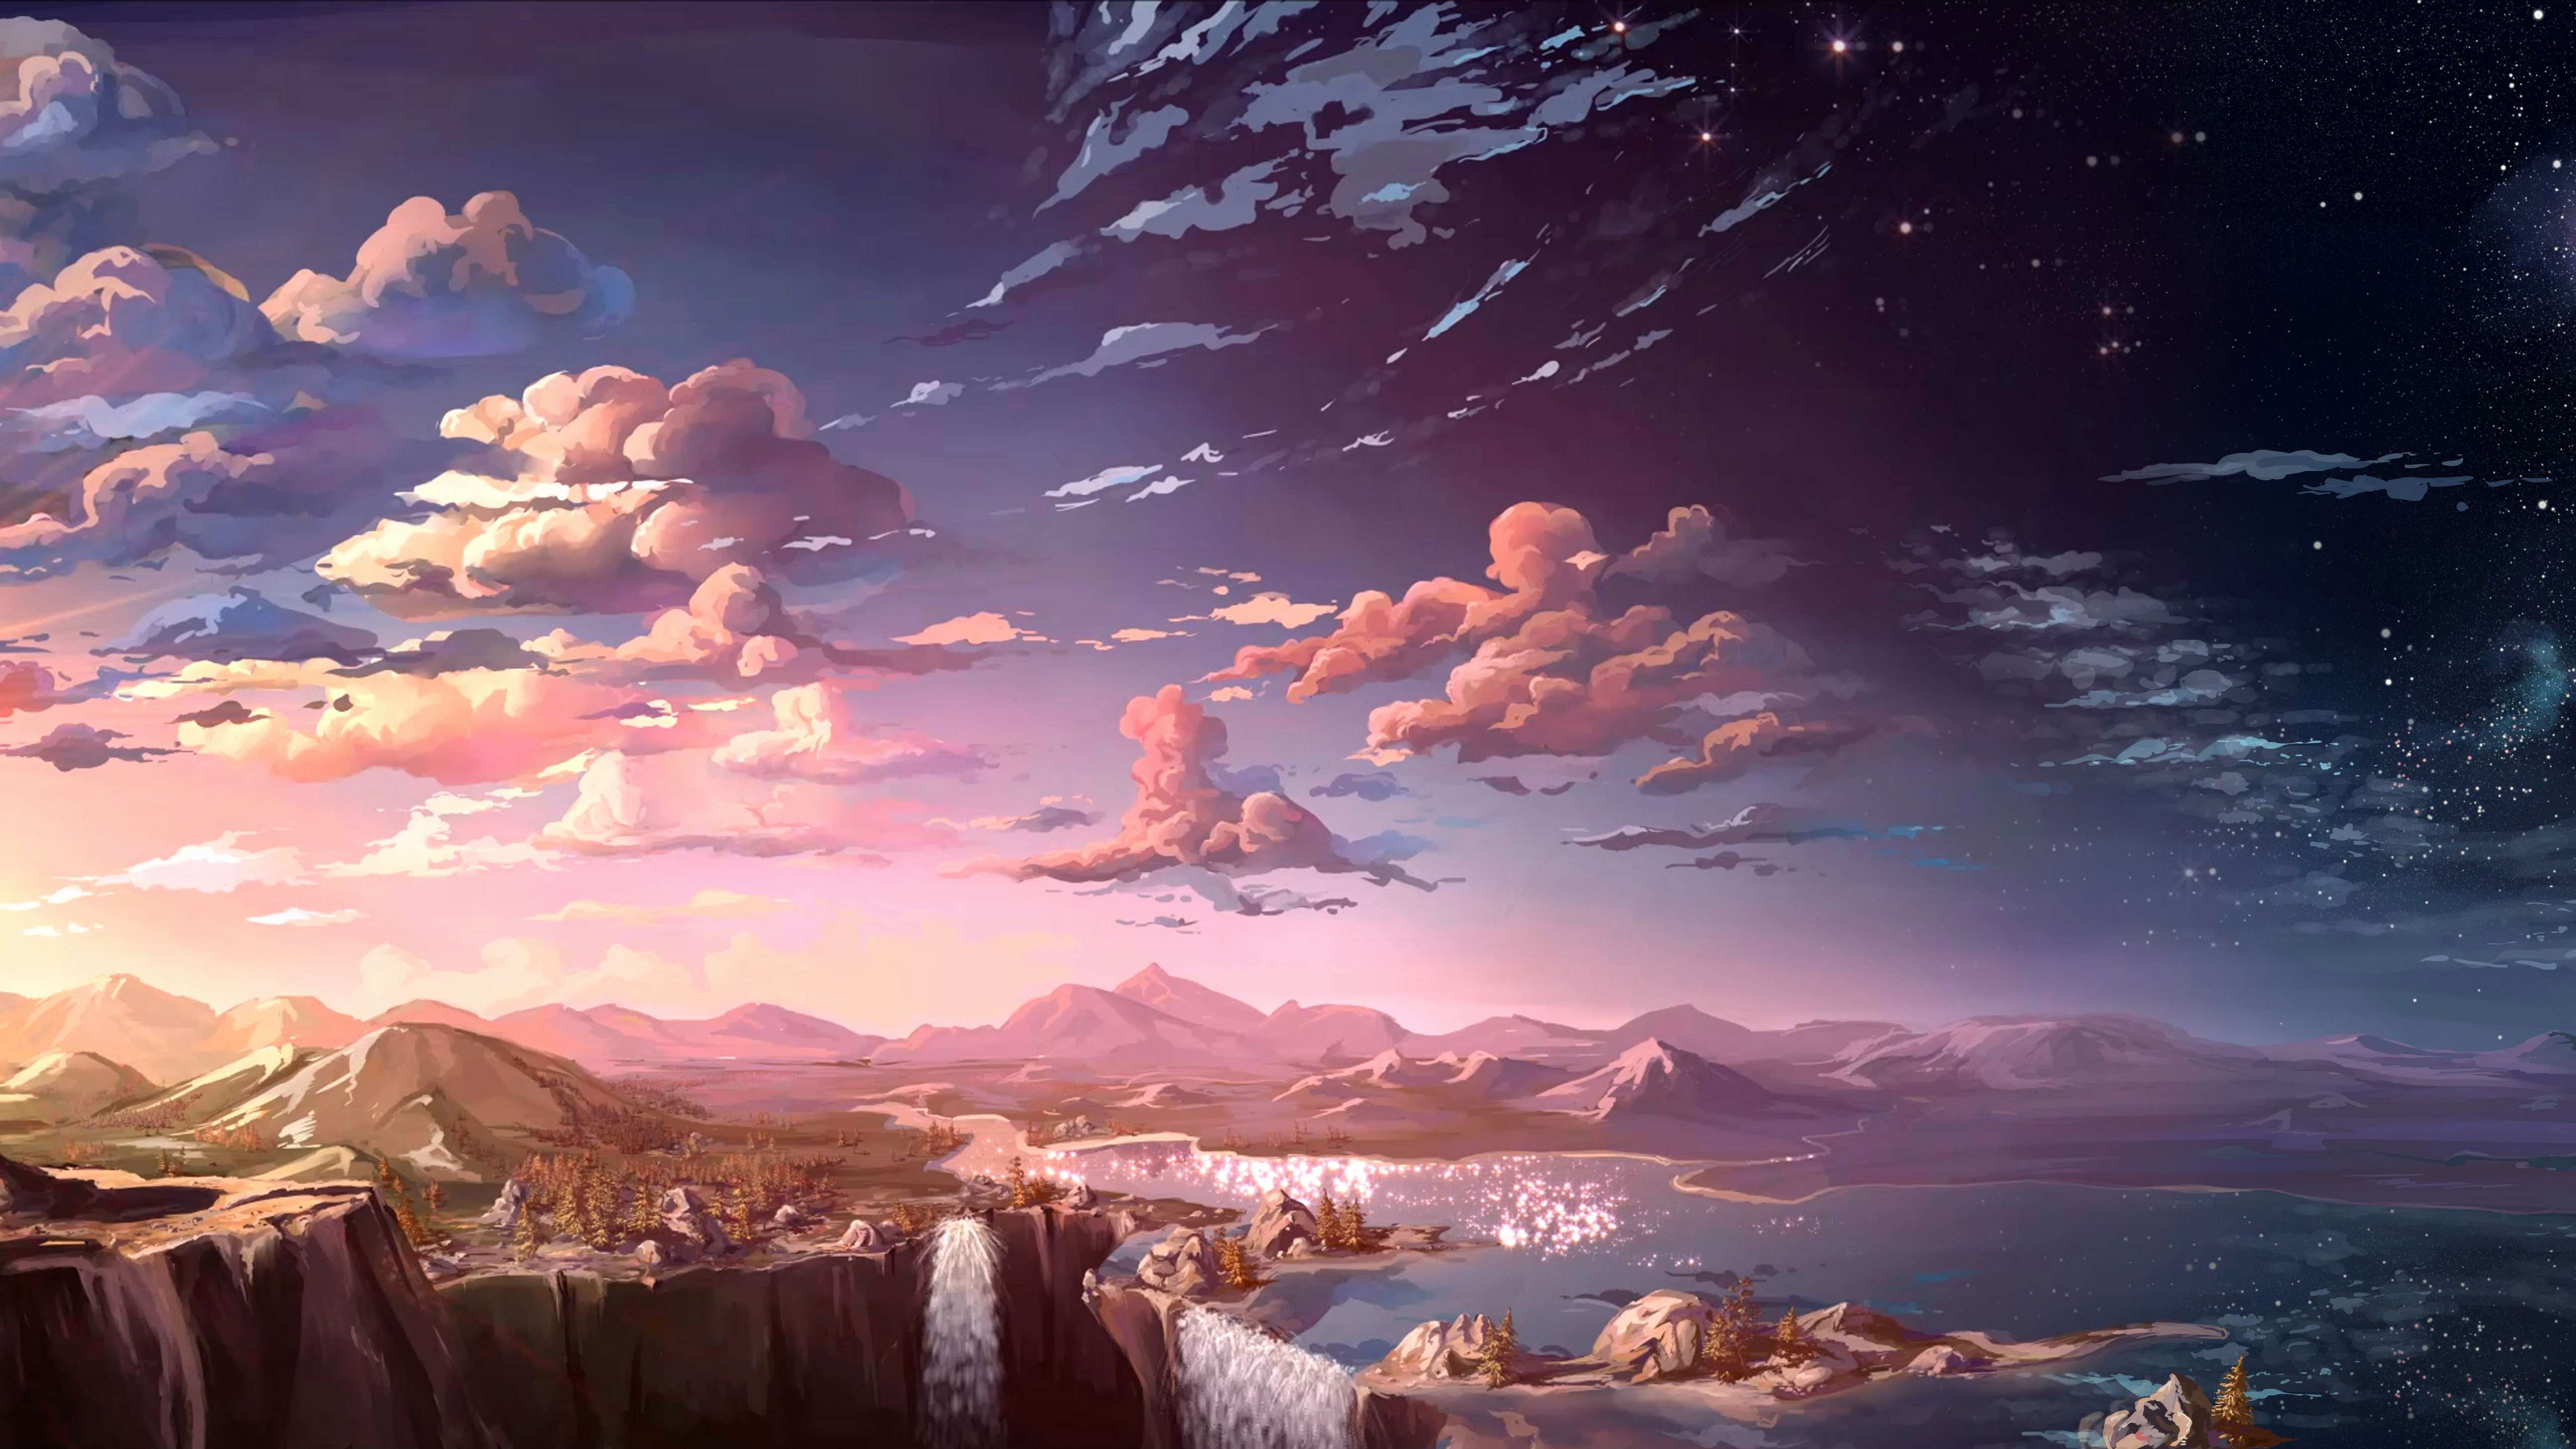 4k Wallpaper Fantasy Landscape